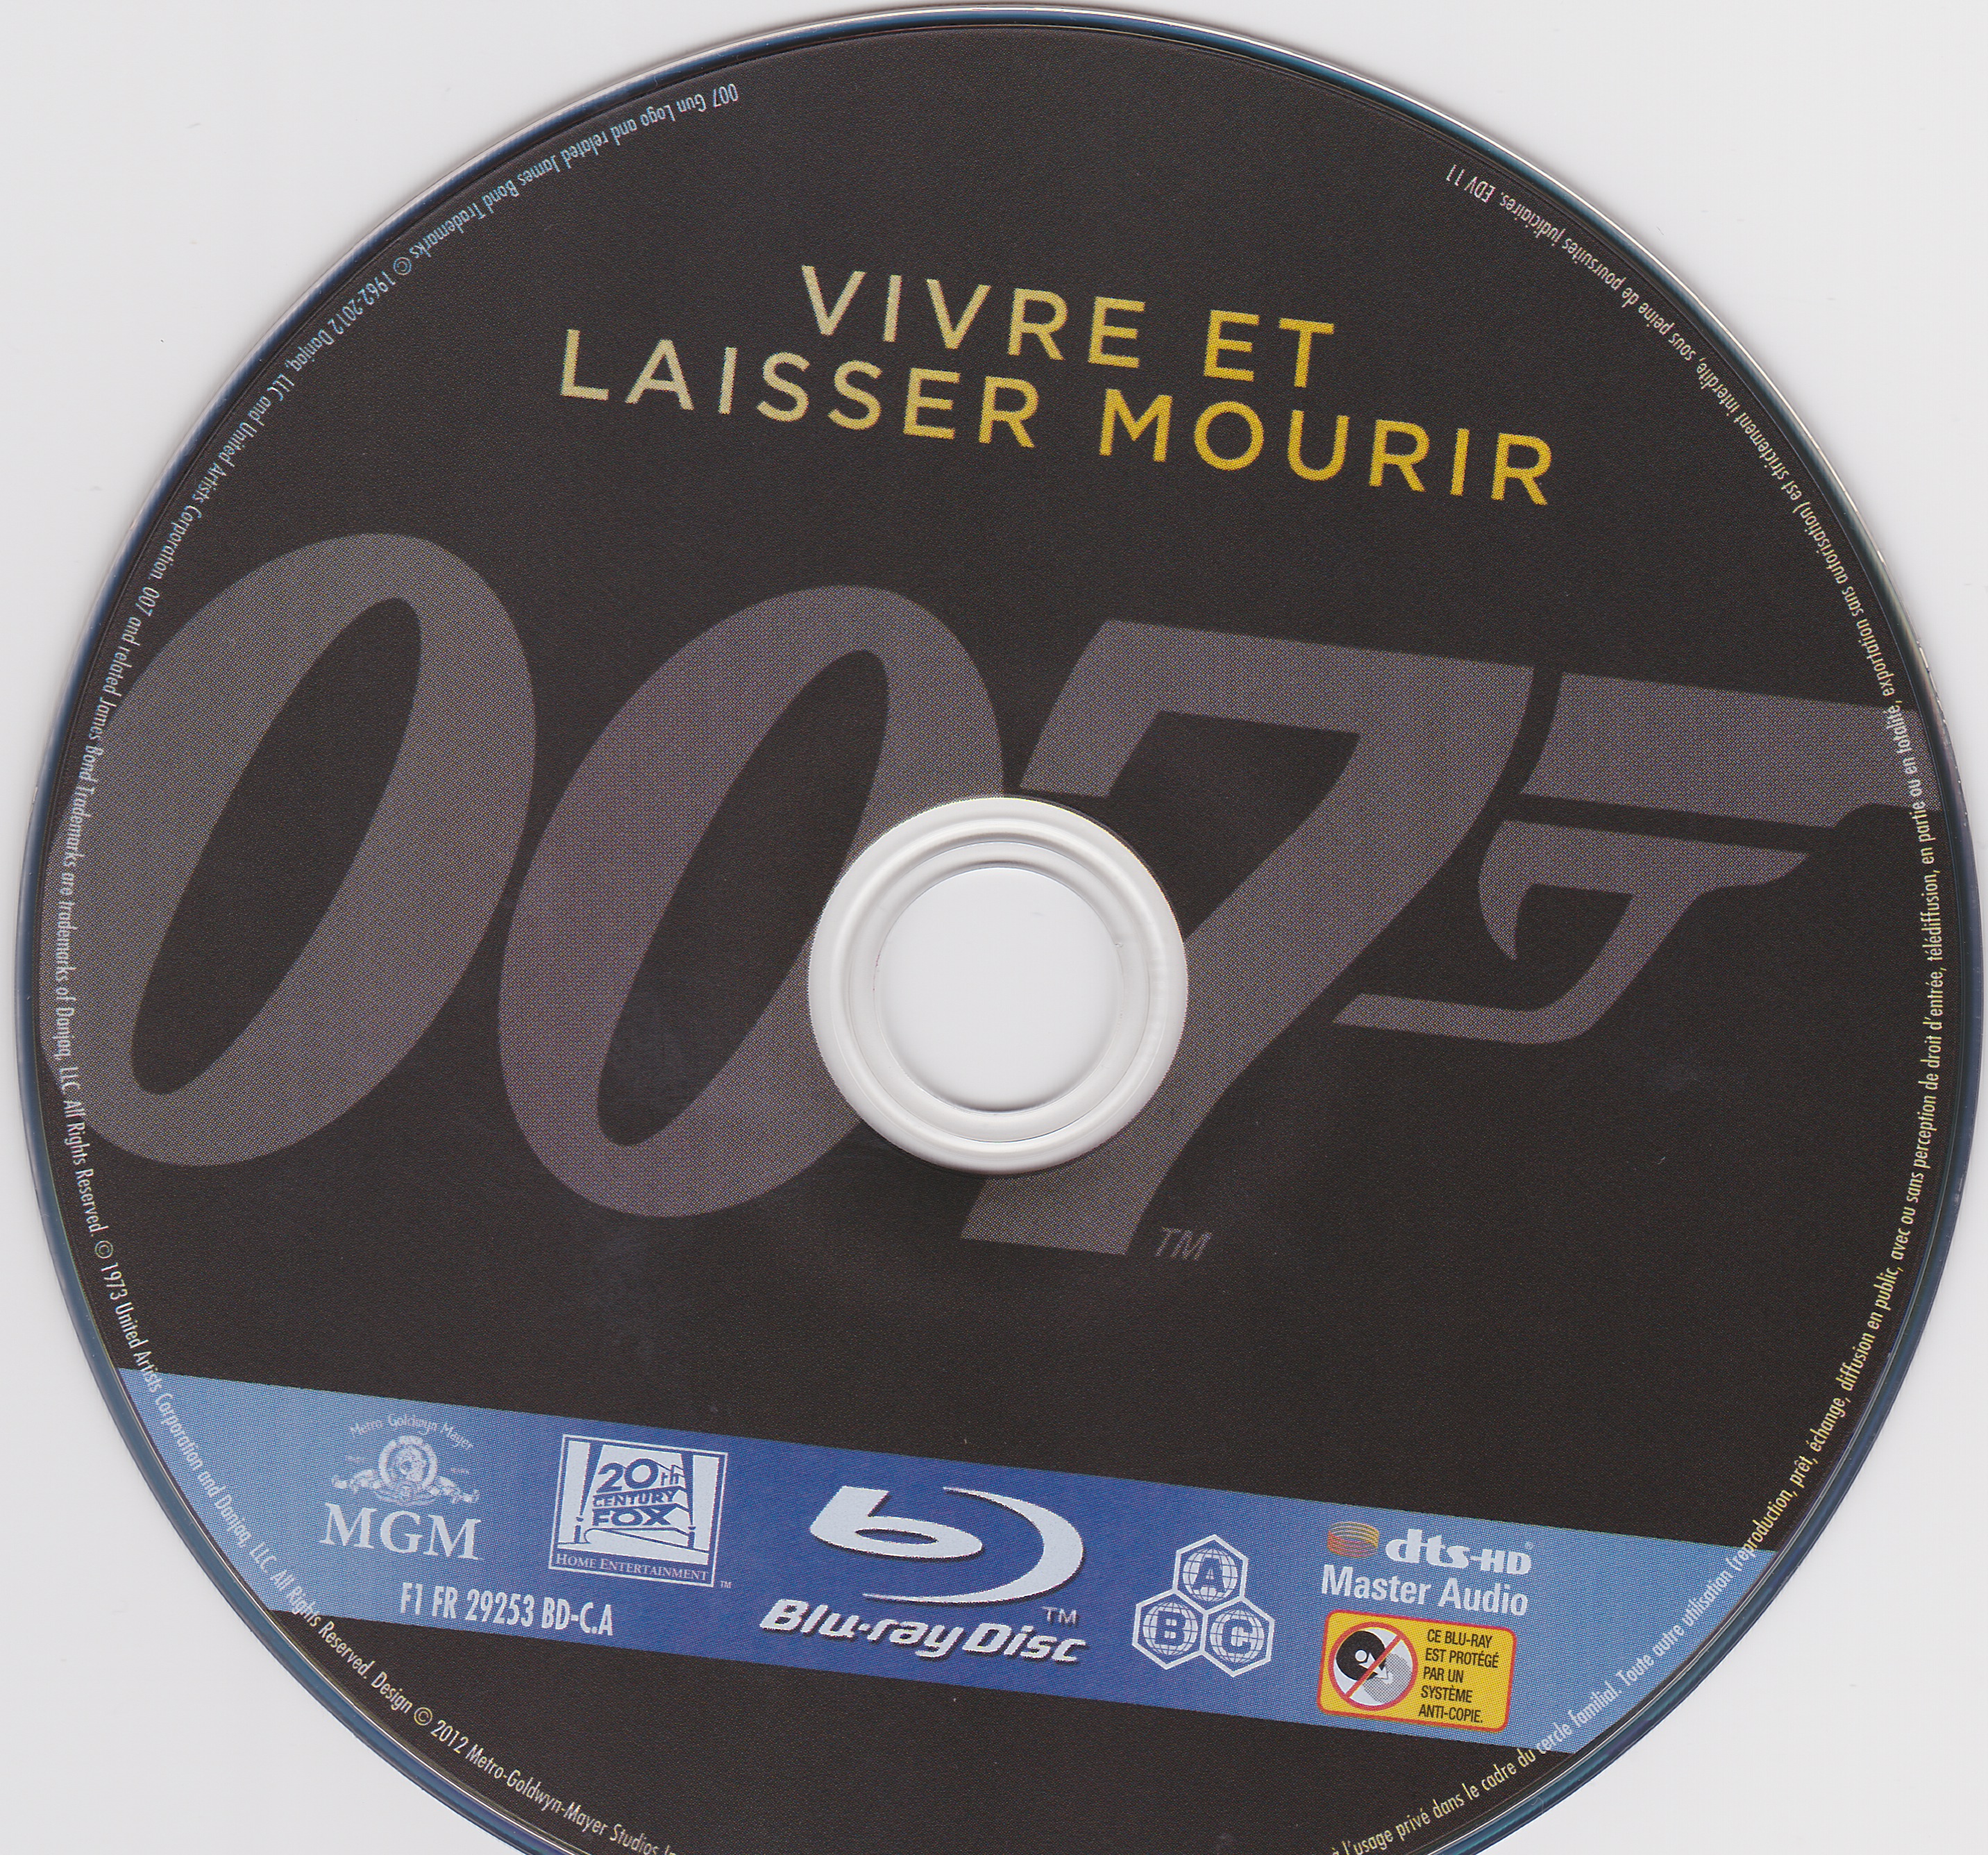 James Bond 007 Vivre et laisser mourir (BLU-RAY)